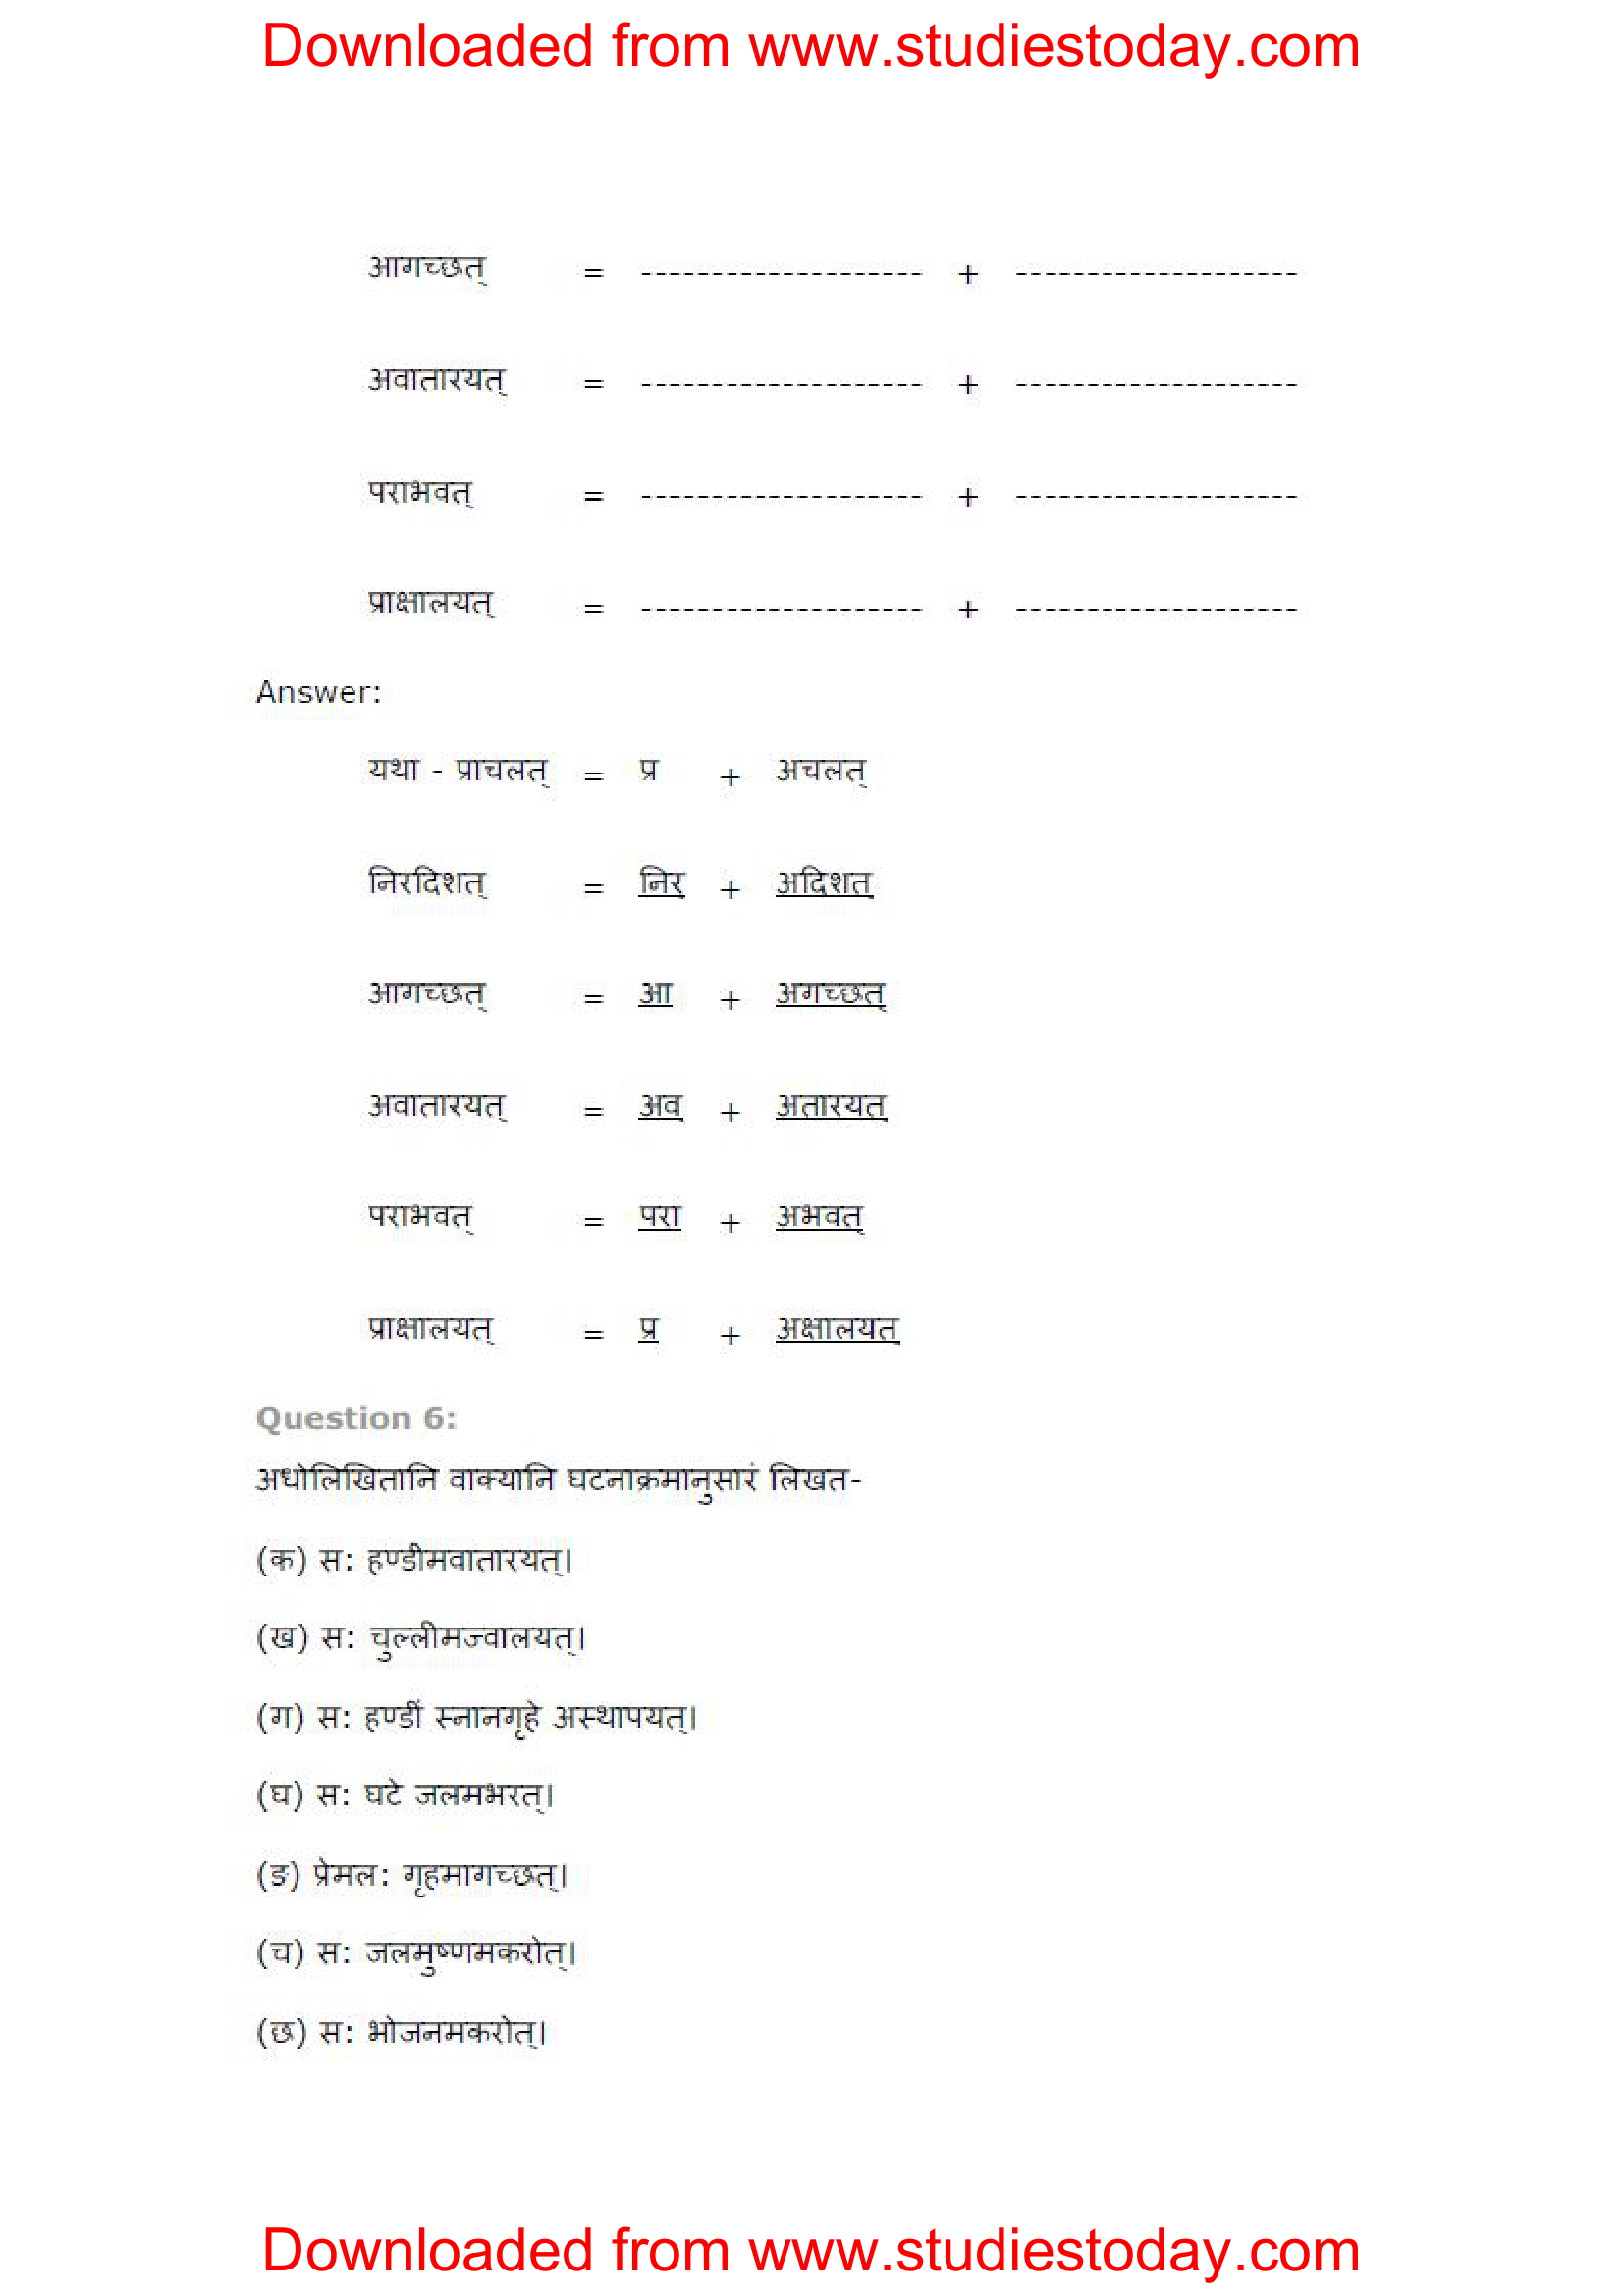 ncert-solutions-class-8-sanskrit-chapter-6-premley-premtyakh-katha-6